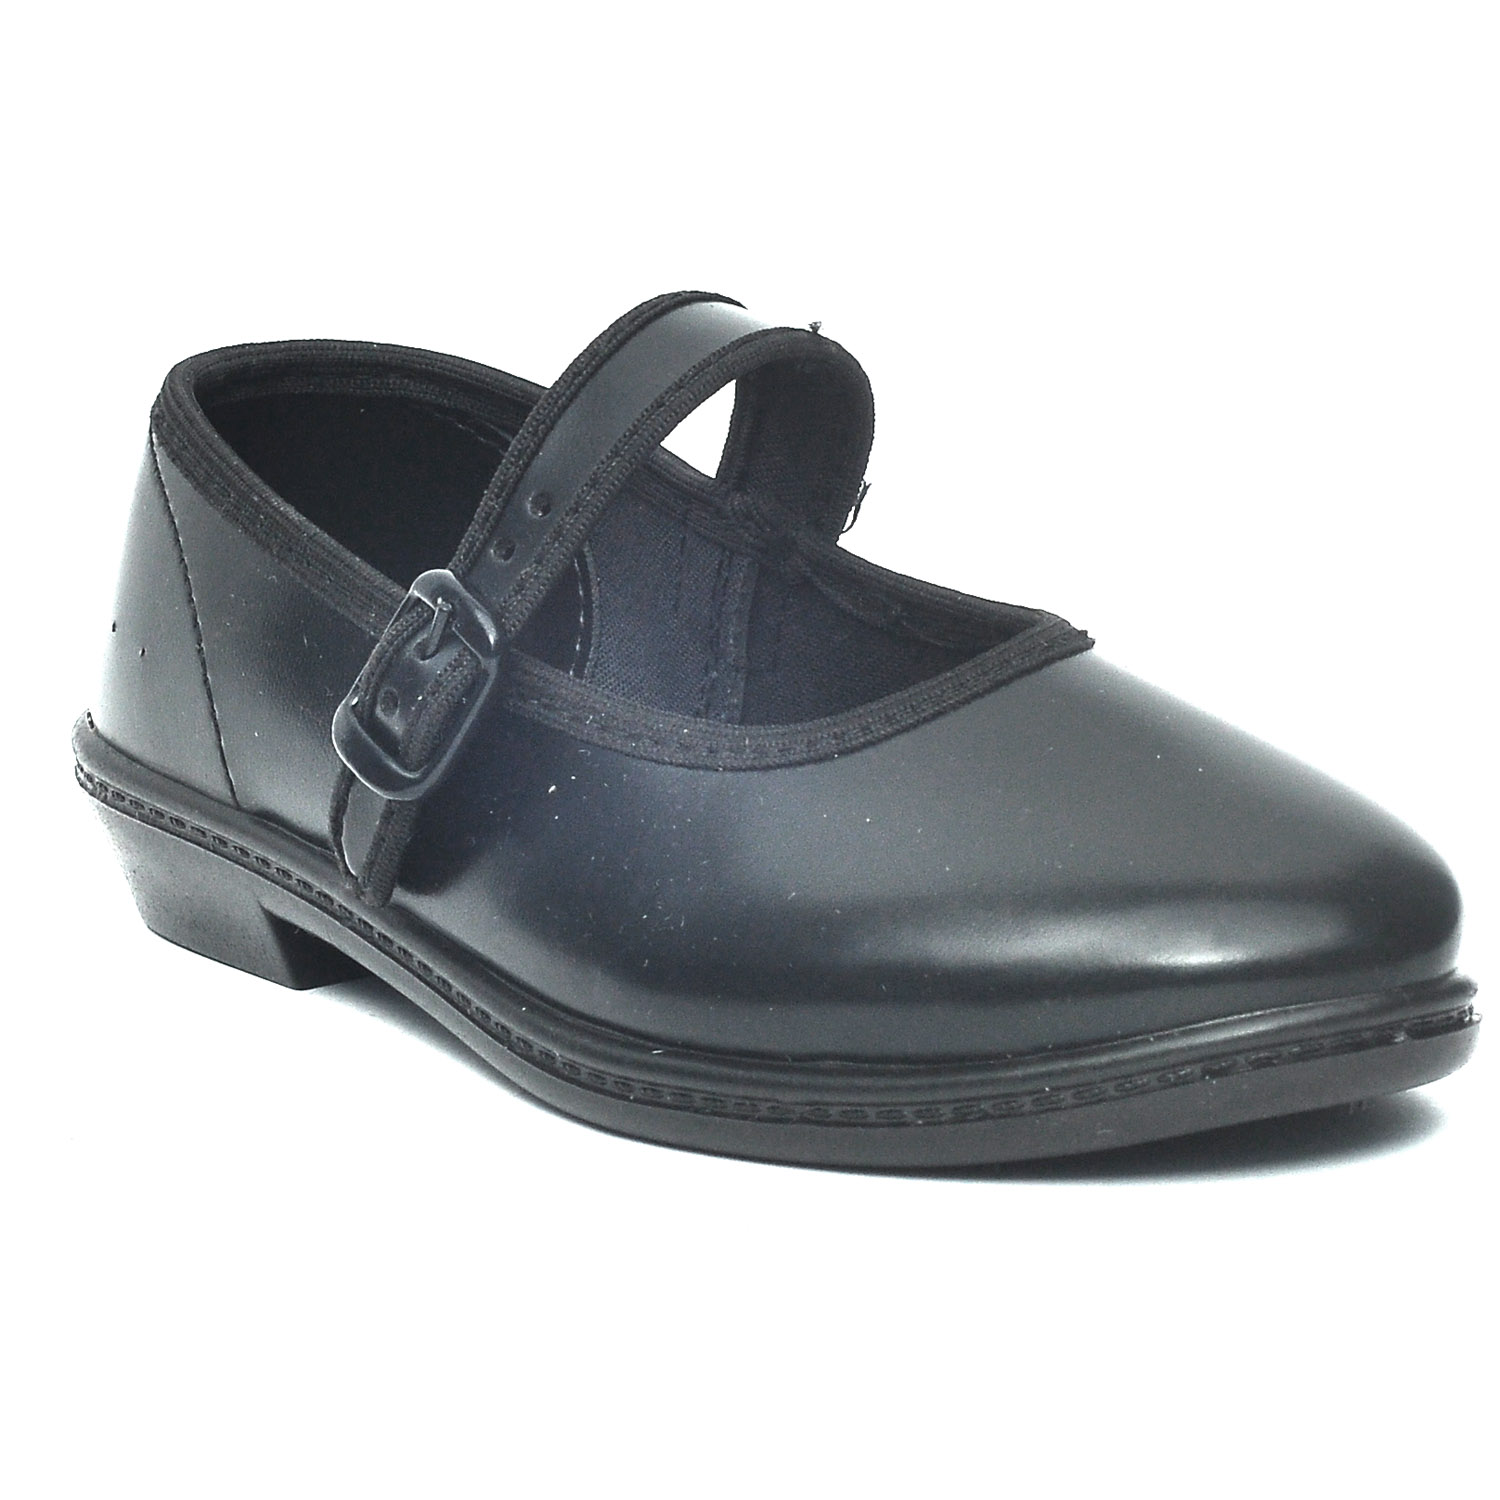 Boulevard Girls Kids Childrens Black Patent Velcro School Formal Party Shoes Size 8-2 